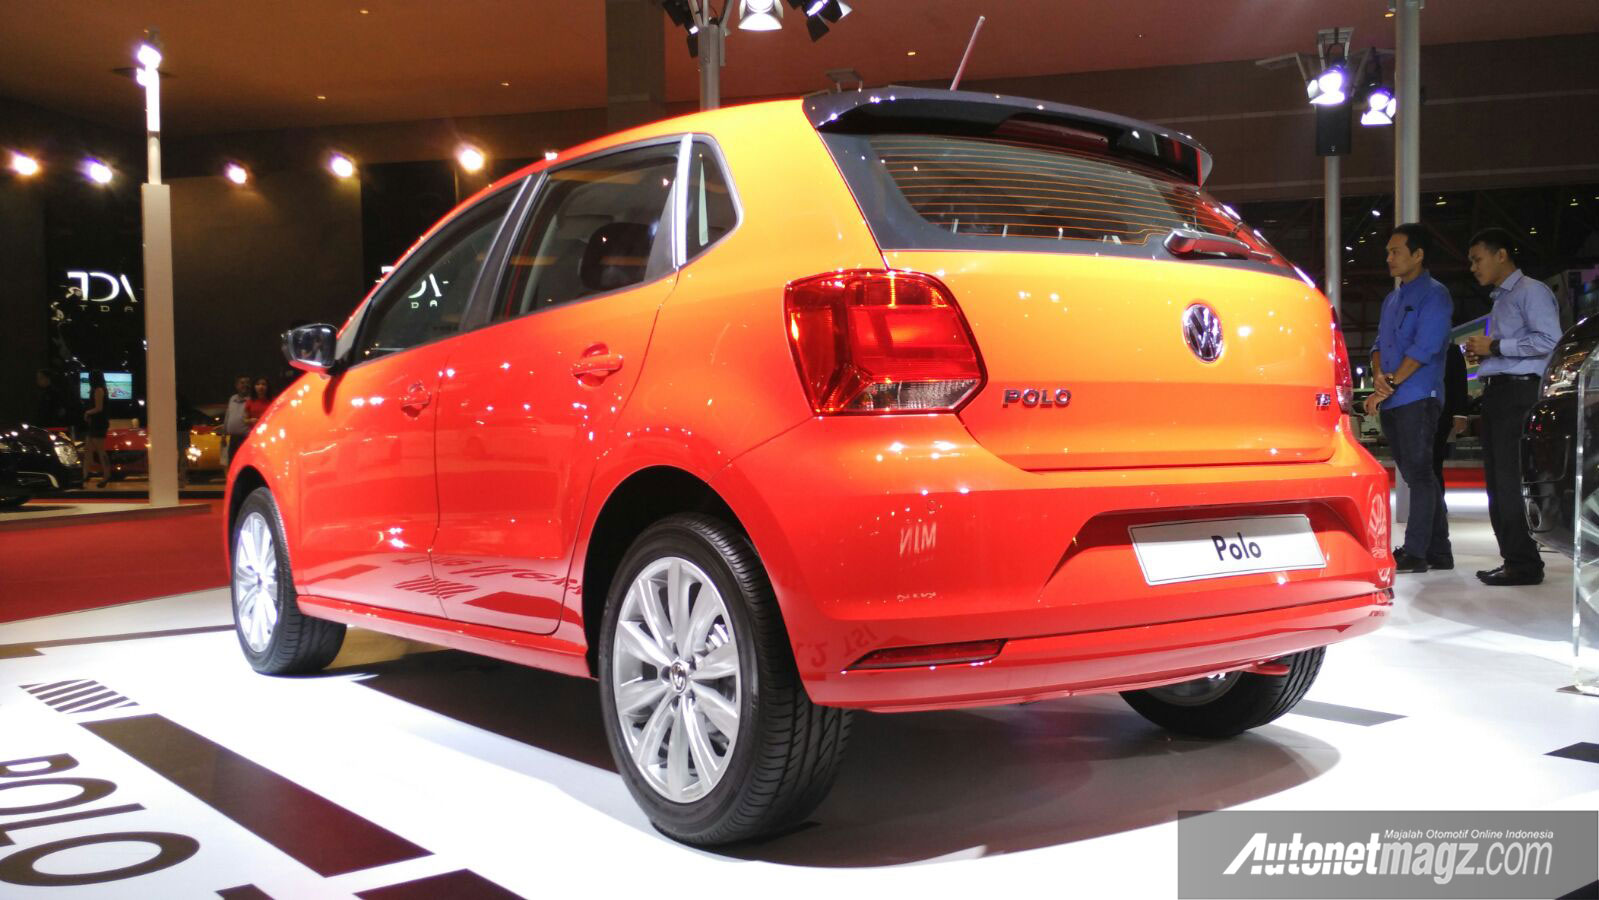 IIMS 2015, VW-Polo-1200-cc-Turbo: Wih VW Polo Baru Kini Lebih Murah Dari Honda Jazz!